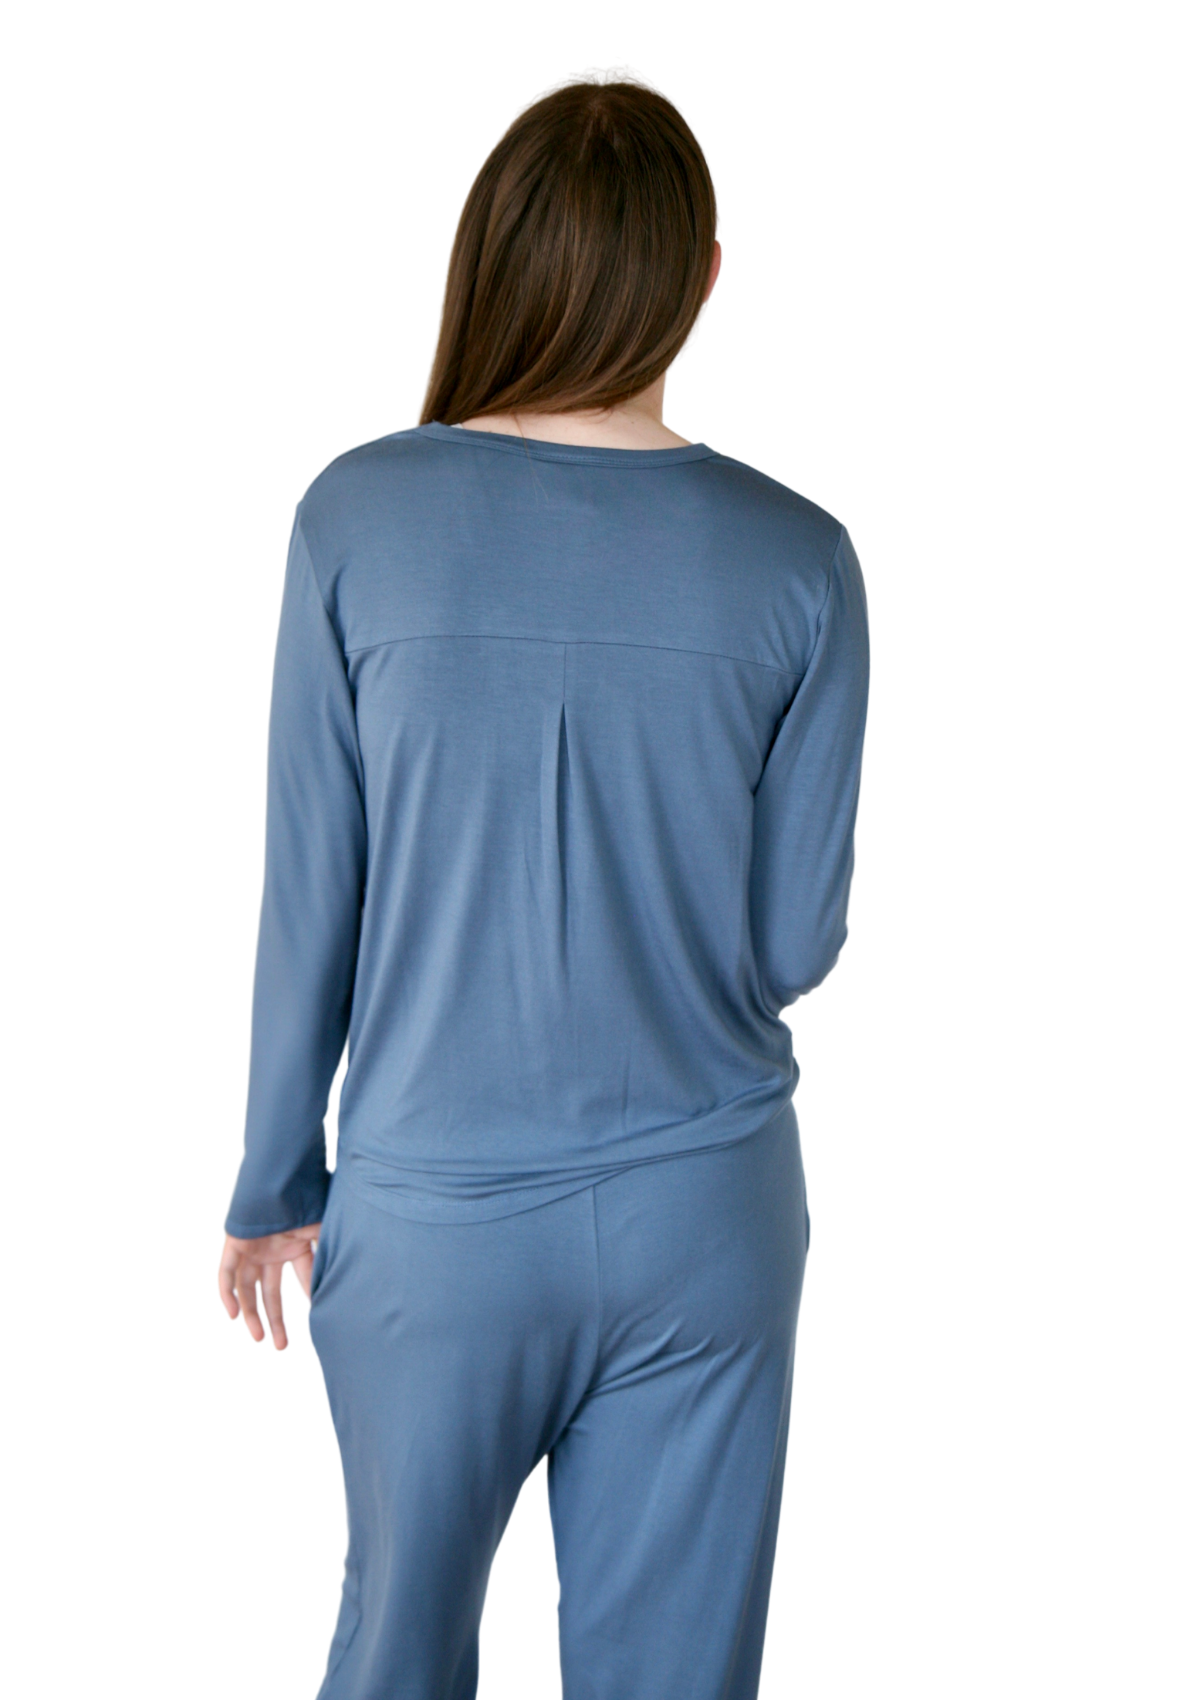 blue-teen-girls-winter-pyjamas by Love Haidee Australia long pants and long sleeve top  back close up